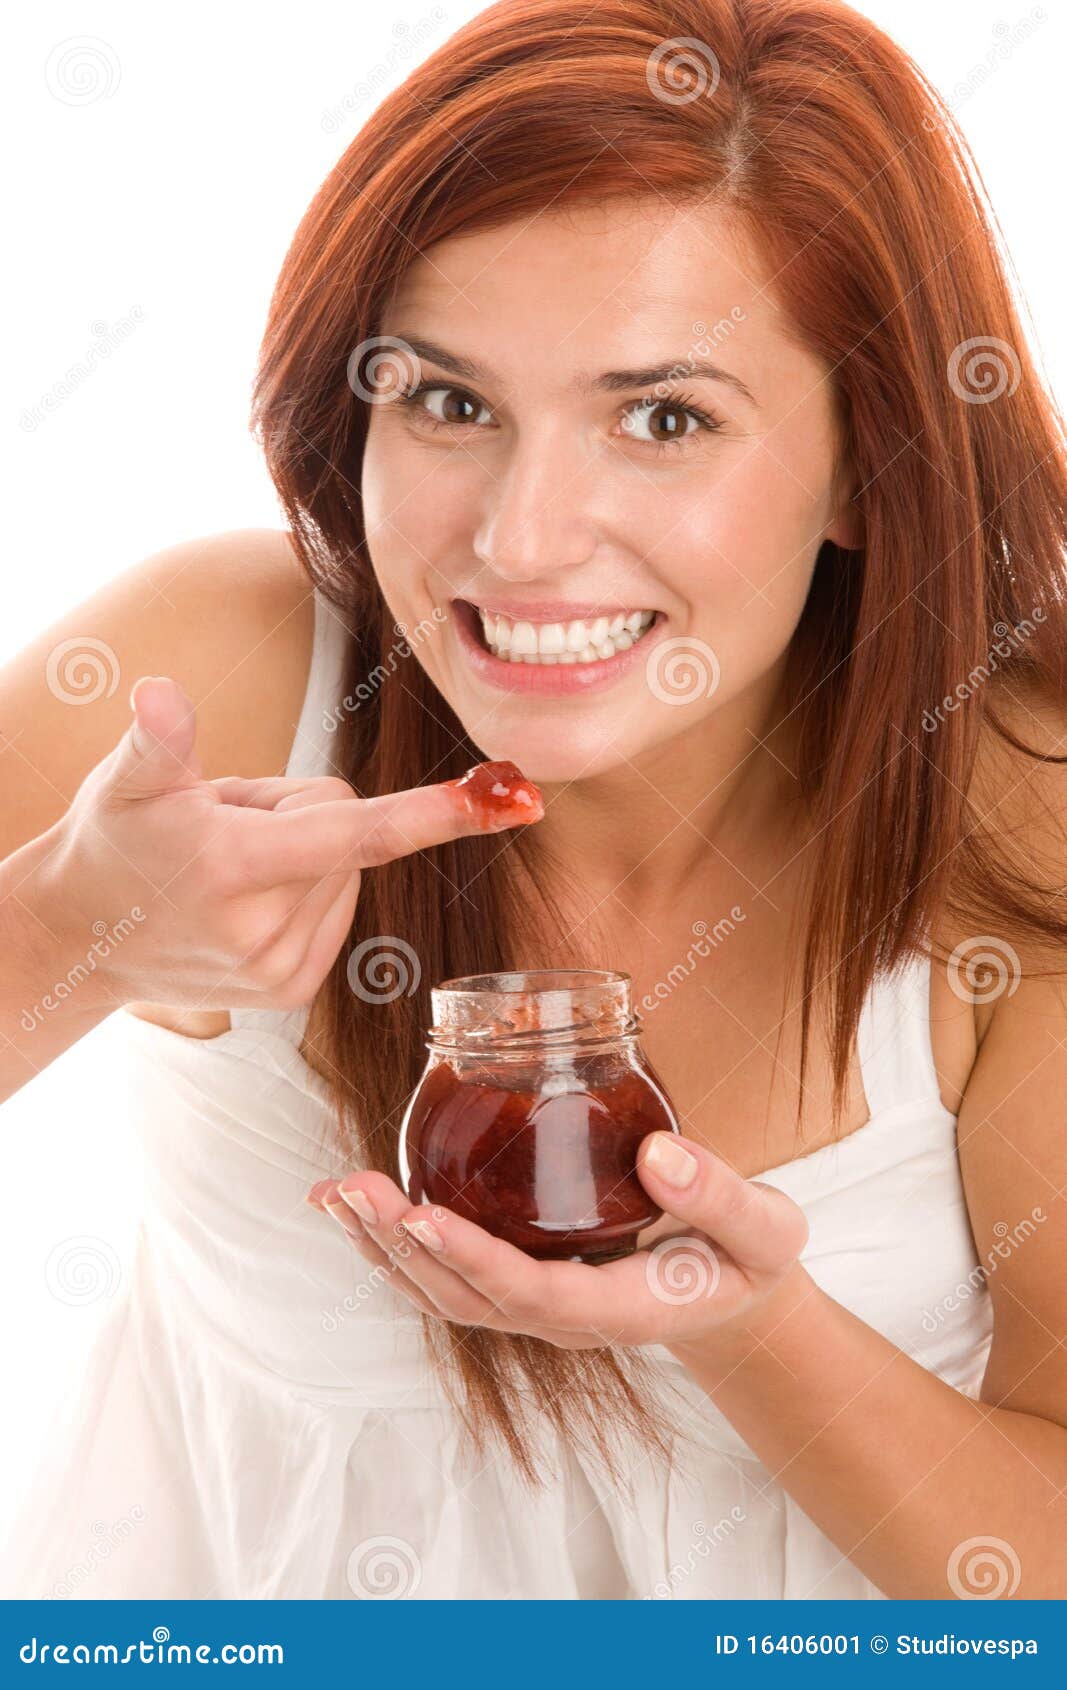 woman eating jam